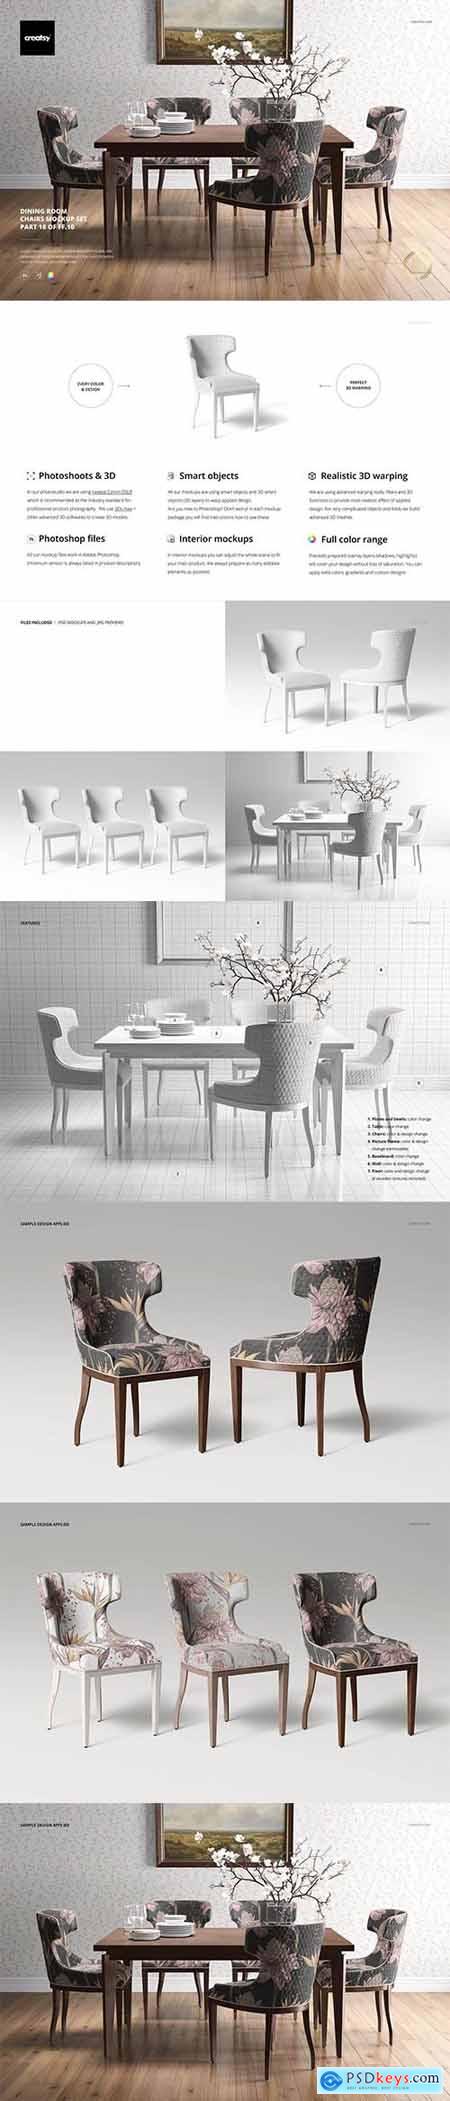 Dining Room Chair Mockup Set 3898381